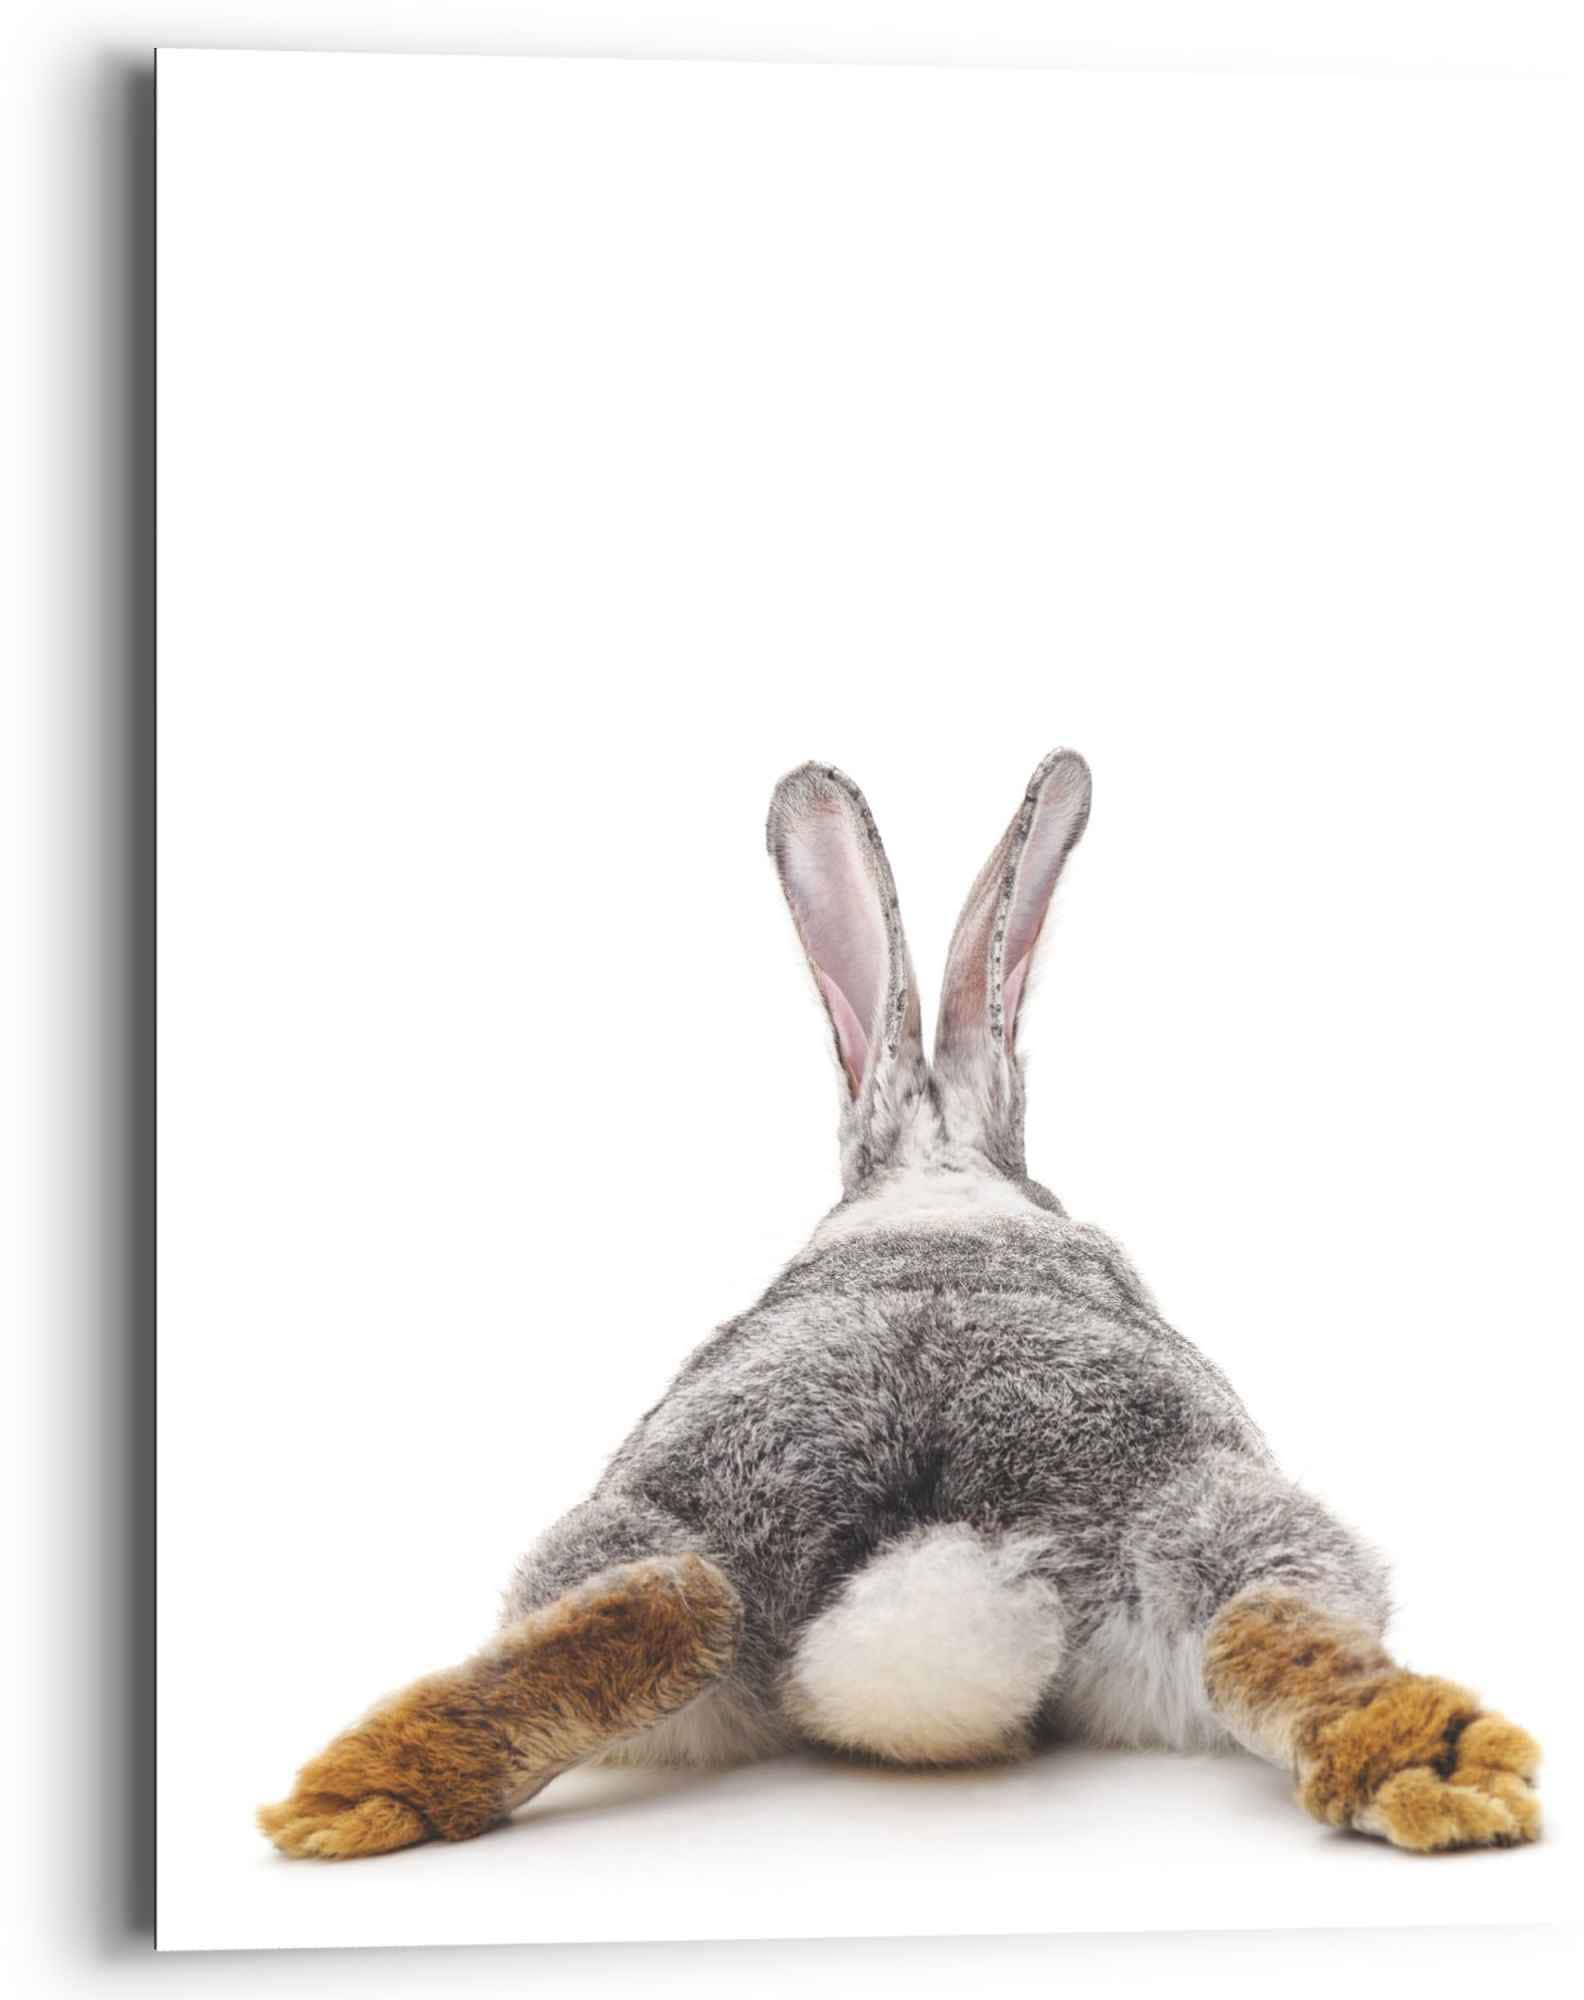 Wandbild Relax«, »Wandbild St.) Schwanz auf Hase Raten Hasen, - - Rabbit Kaninchen (1 Reinders! - bestellen